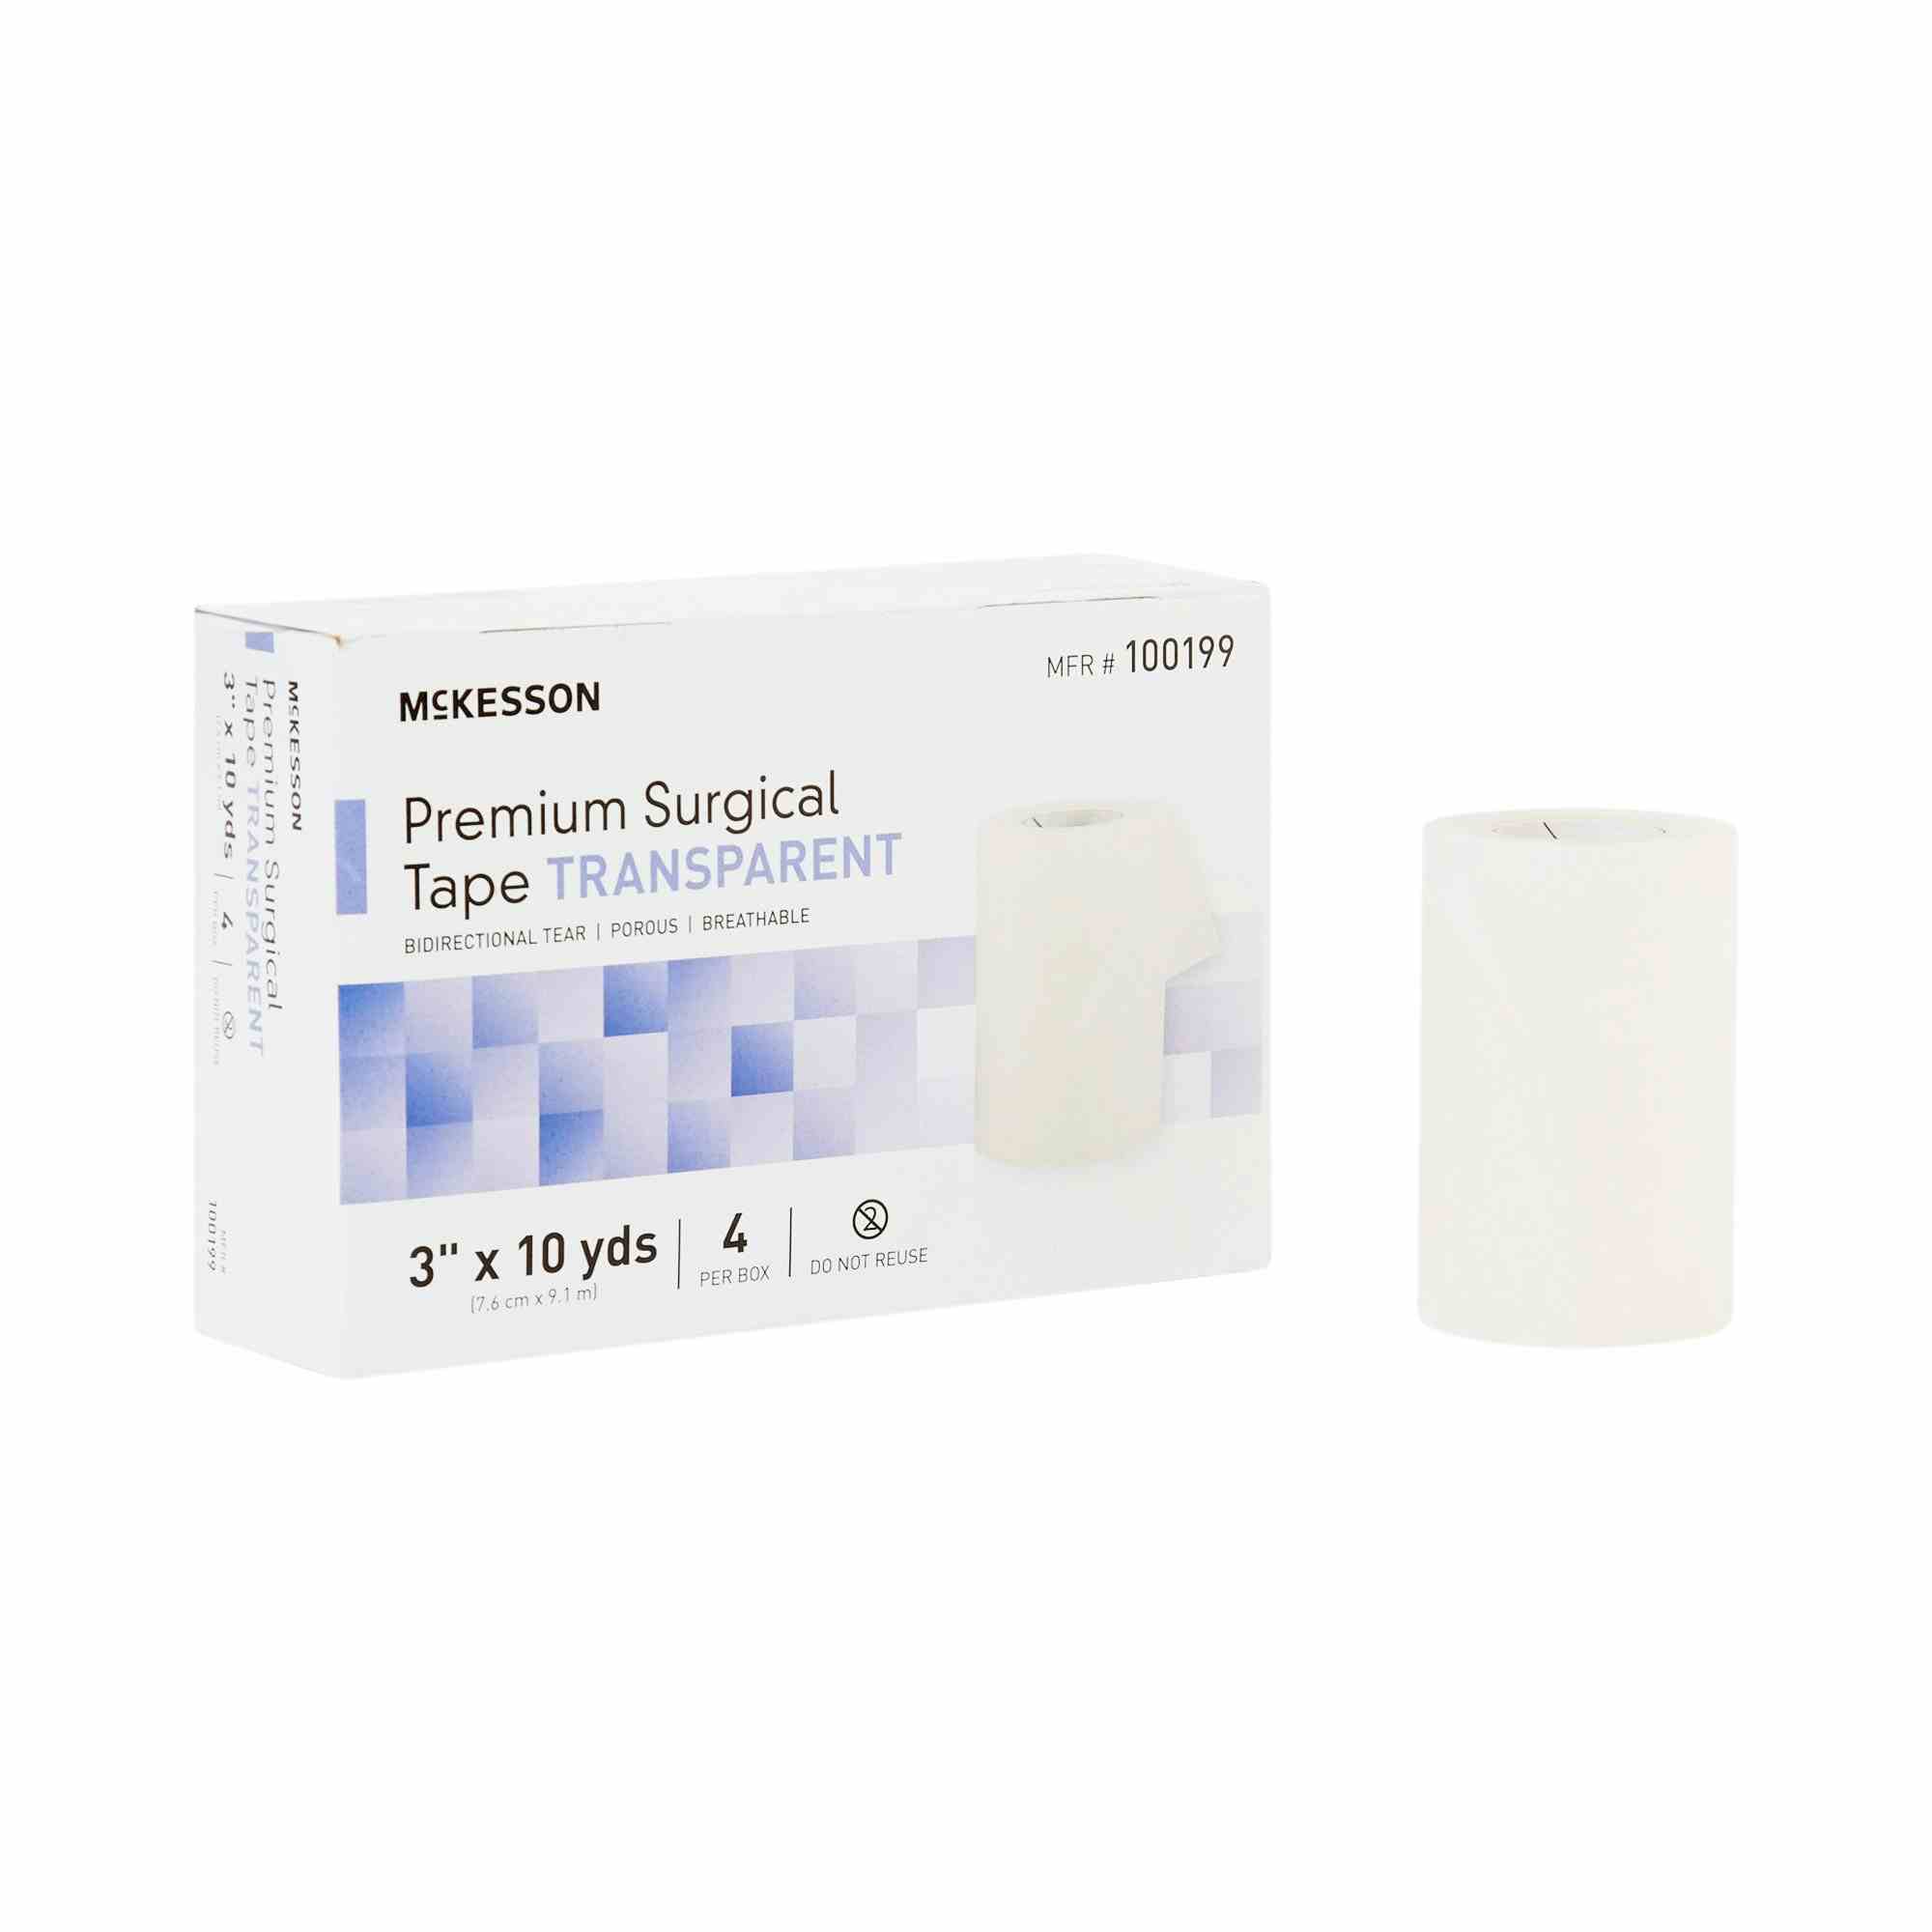 McKesson Plastic Medical Tape, 3 Inch x 10 Yard, Transparent, 100199, Box of 4